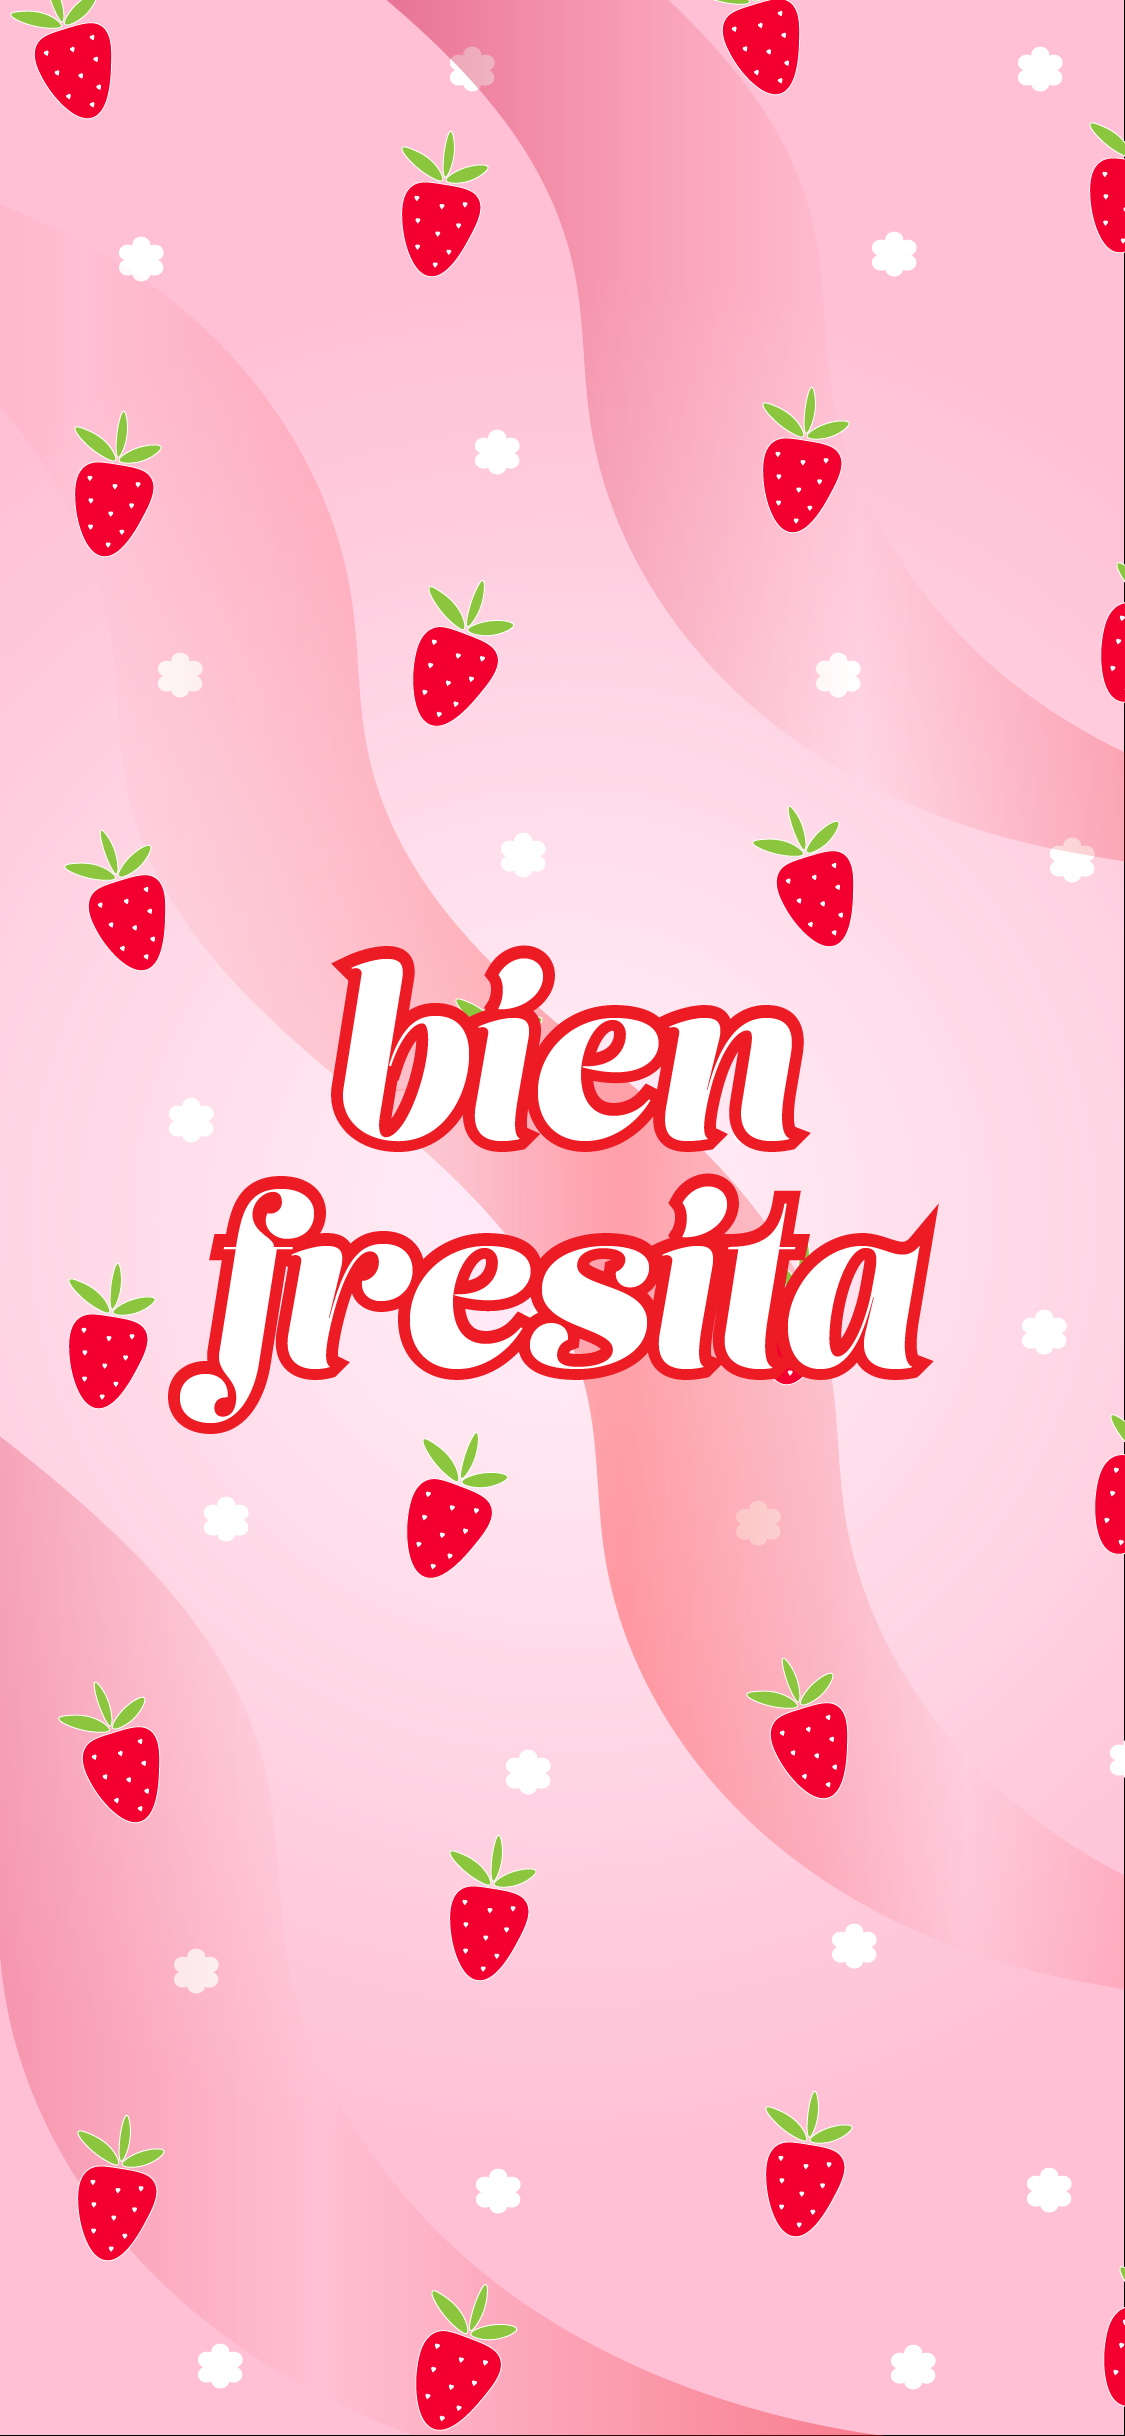 Bien Fresita 🍓 - Wallpaper